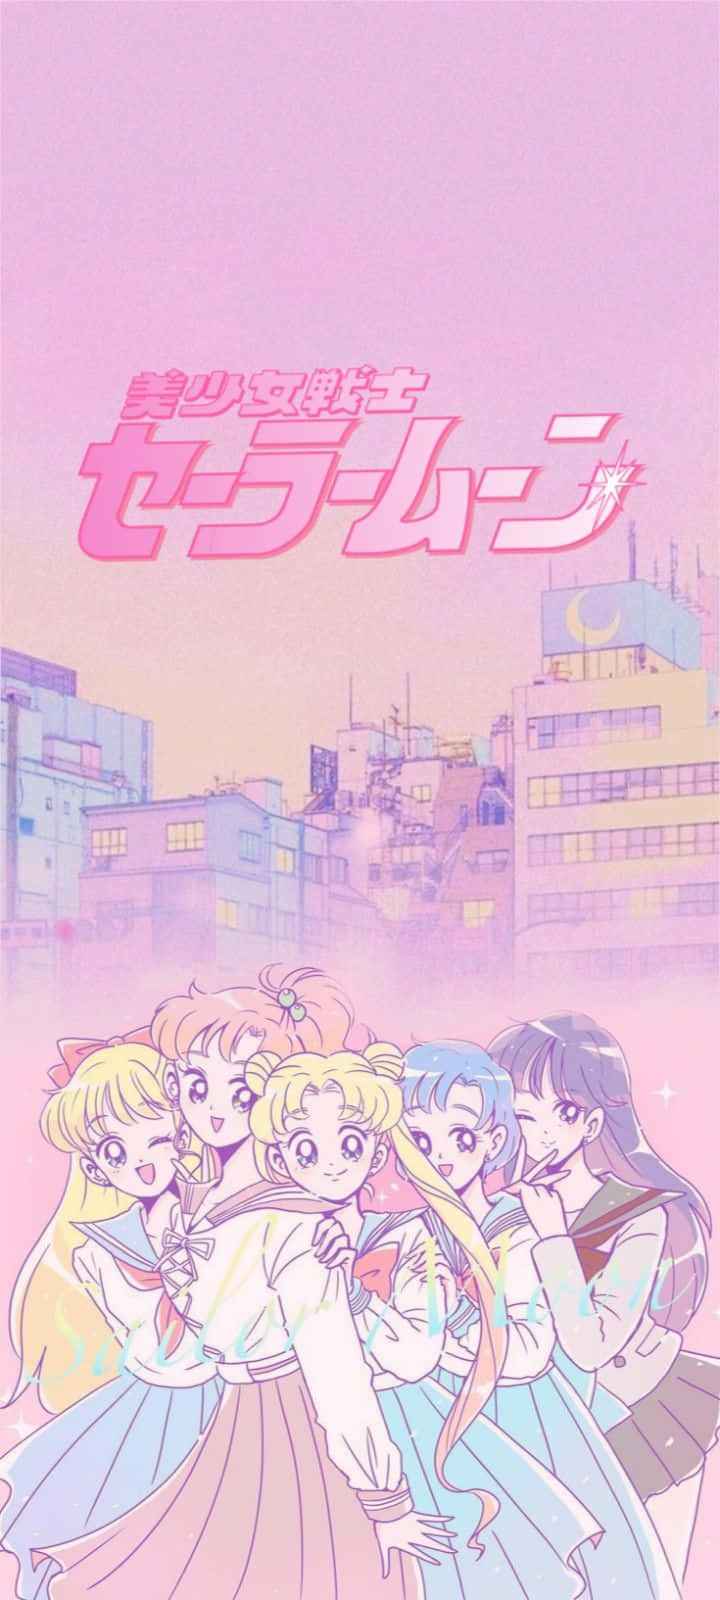 Pink Sailor Moon Group Artwork Wallpaper